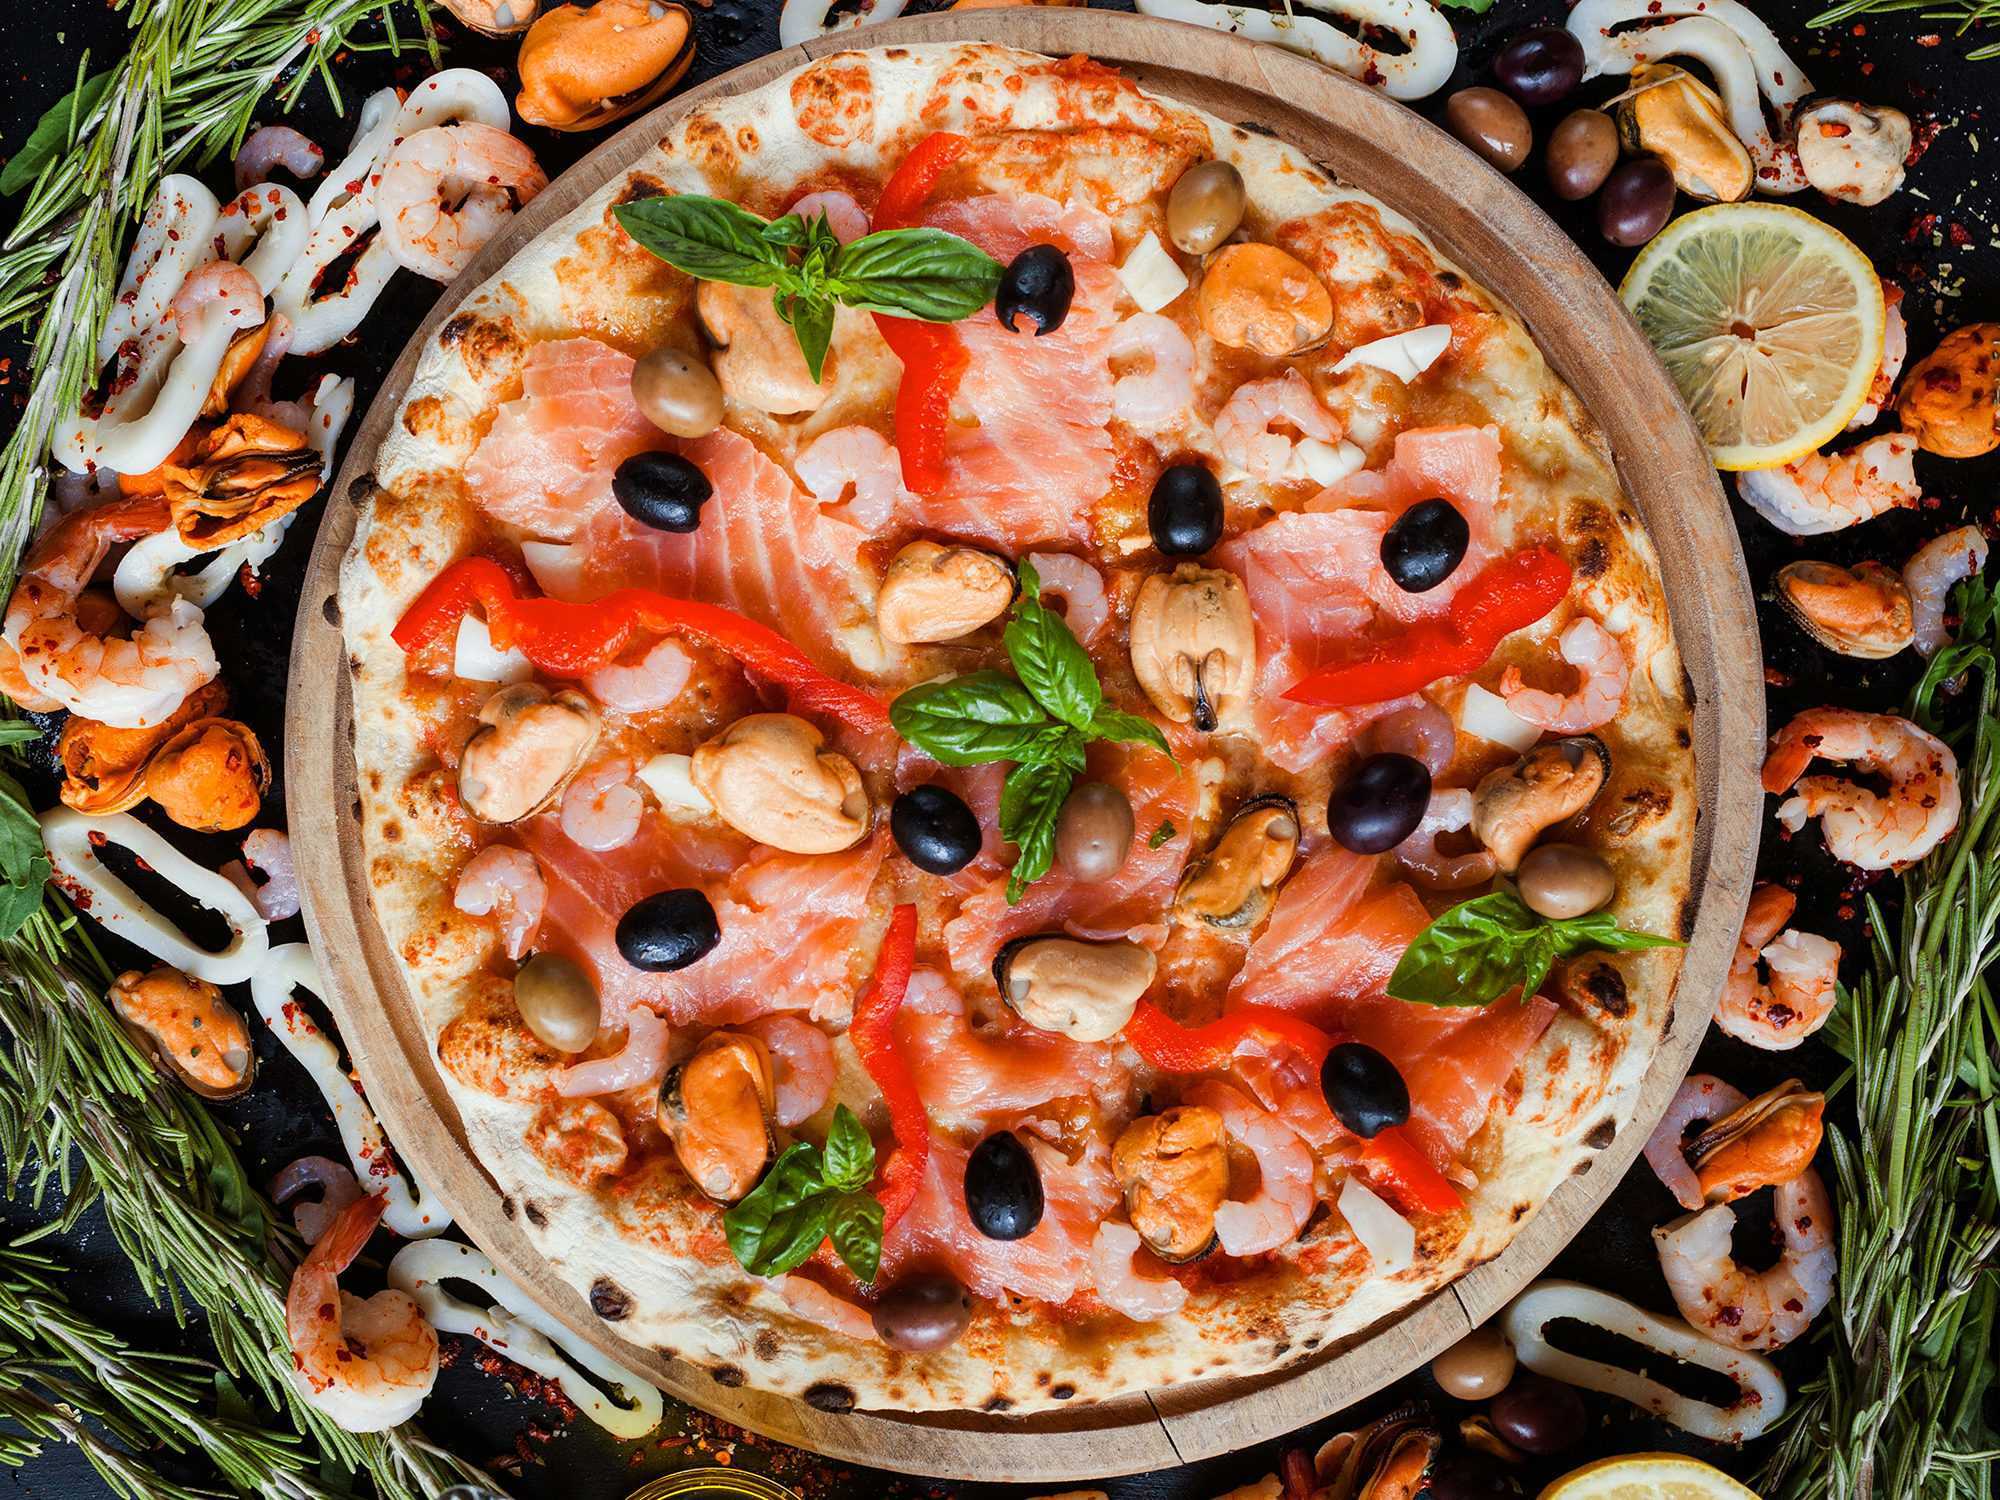 Рецепты еды в sea. Пицца с морепродуктами (Seafood pizza). Пицца с креветками. Пицца дары моря. Пицца маринара с морепродуктами.